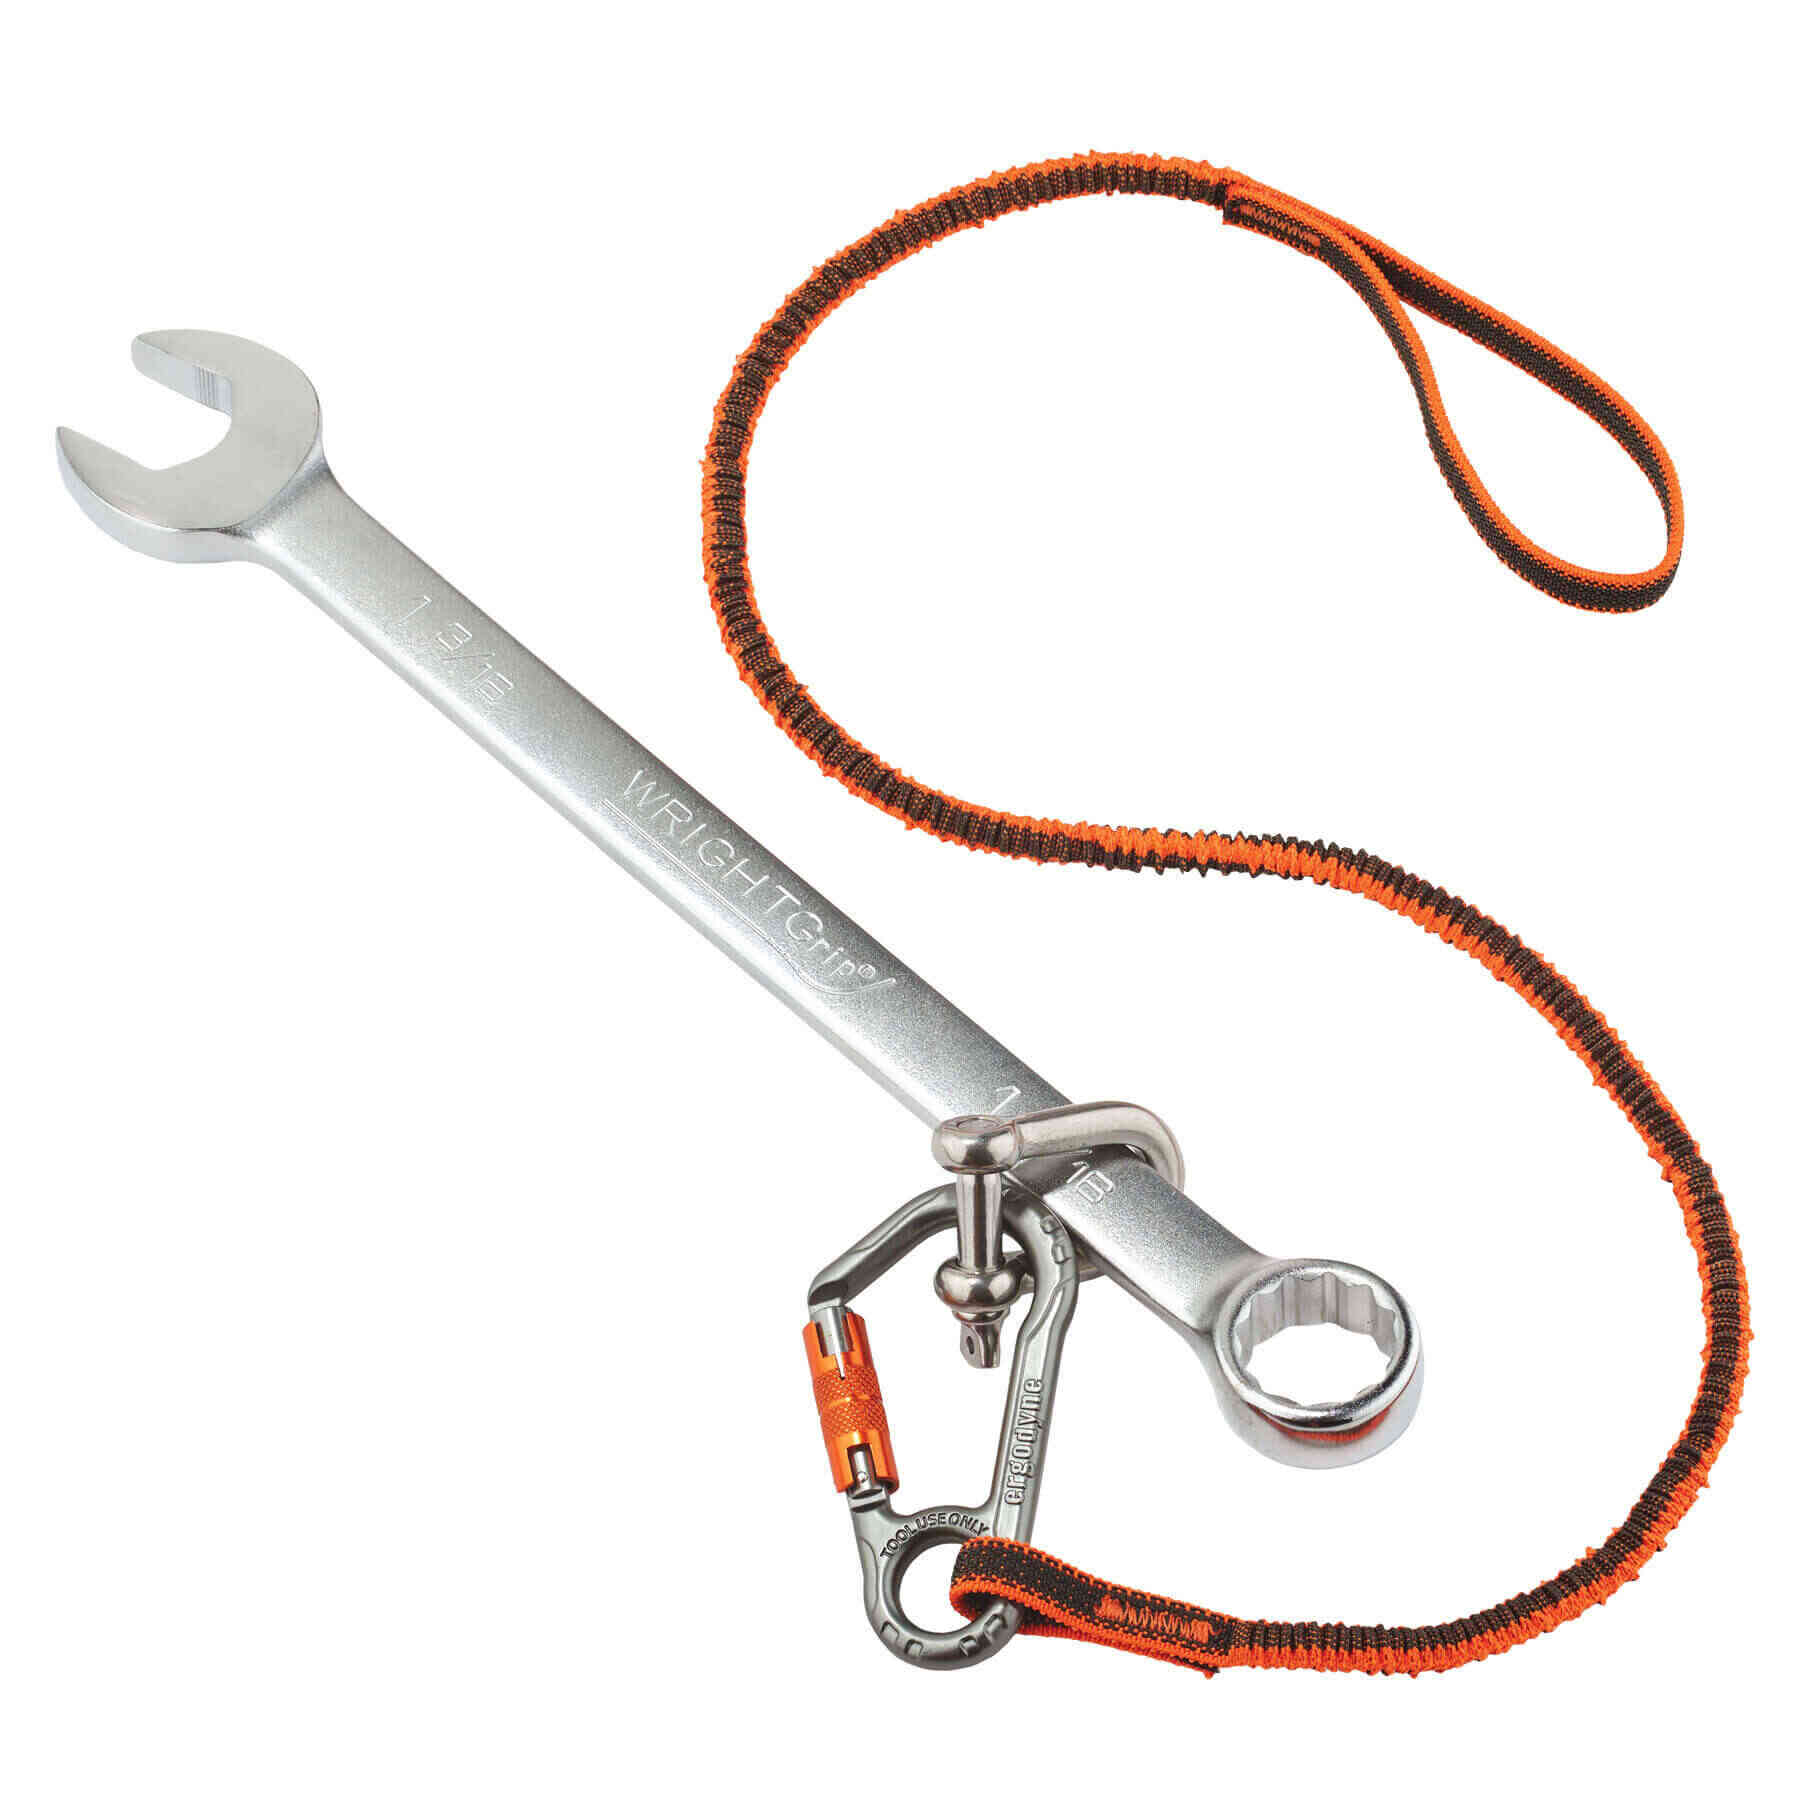 Ergodyne 3104FX Squids Tool Lanyard with Carabiner and Chooke Loop